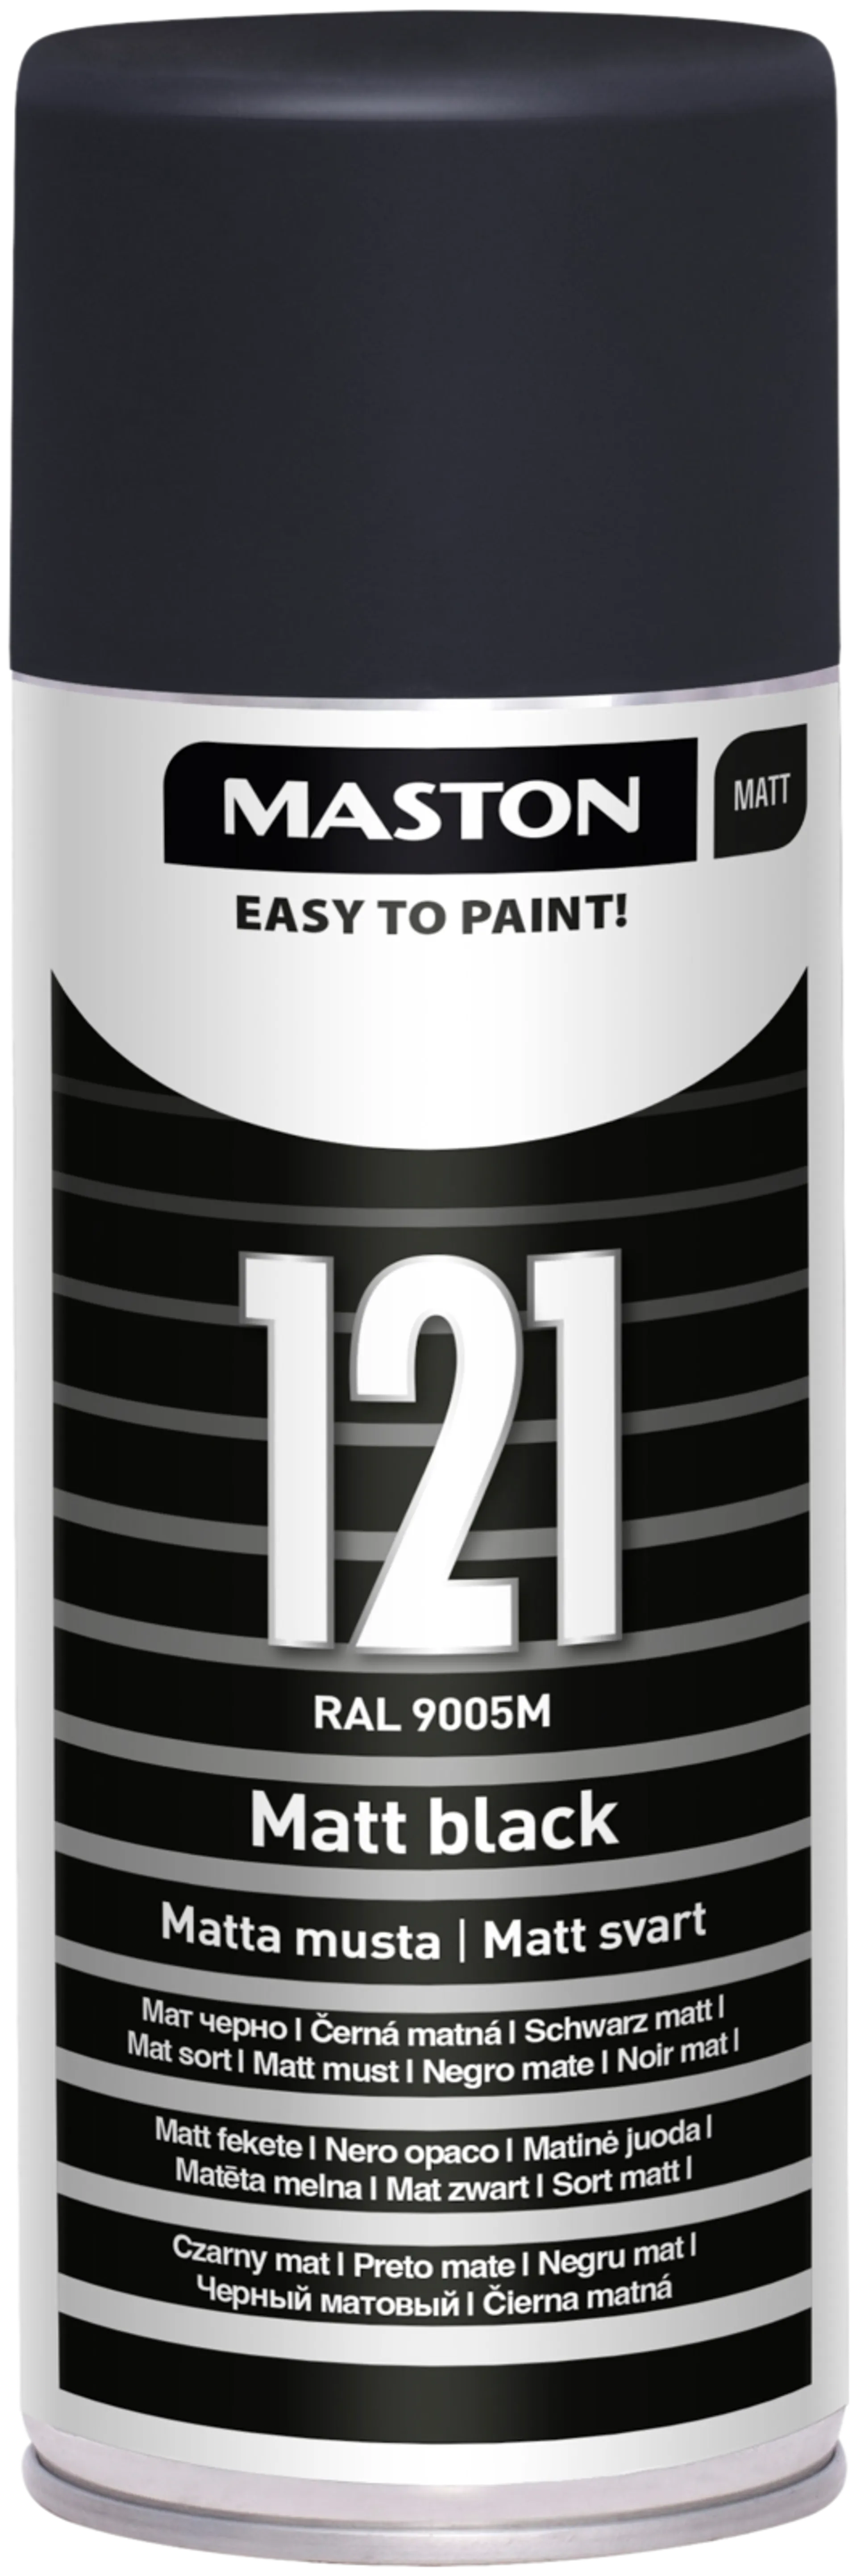 Maston ColorMix spraymaali matta musta 121 400ml RAL 9005